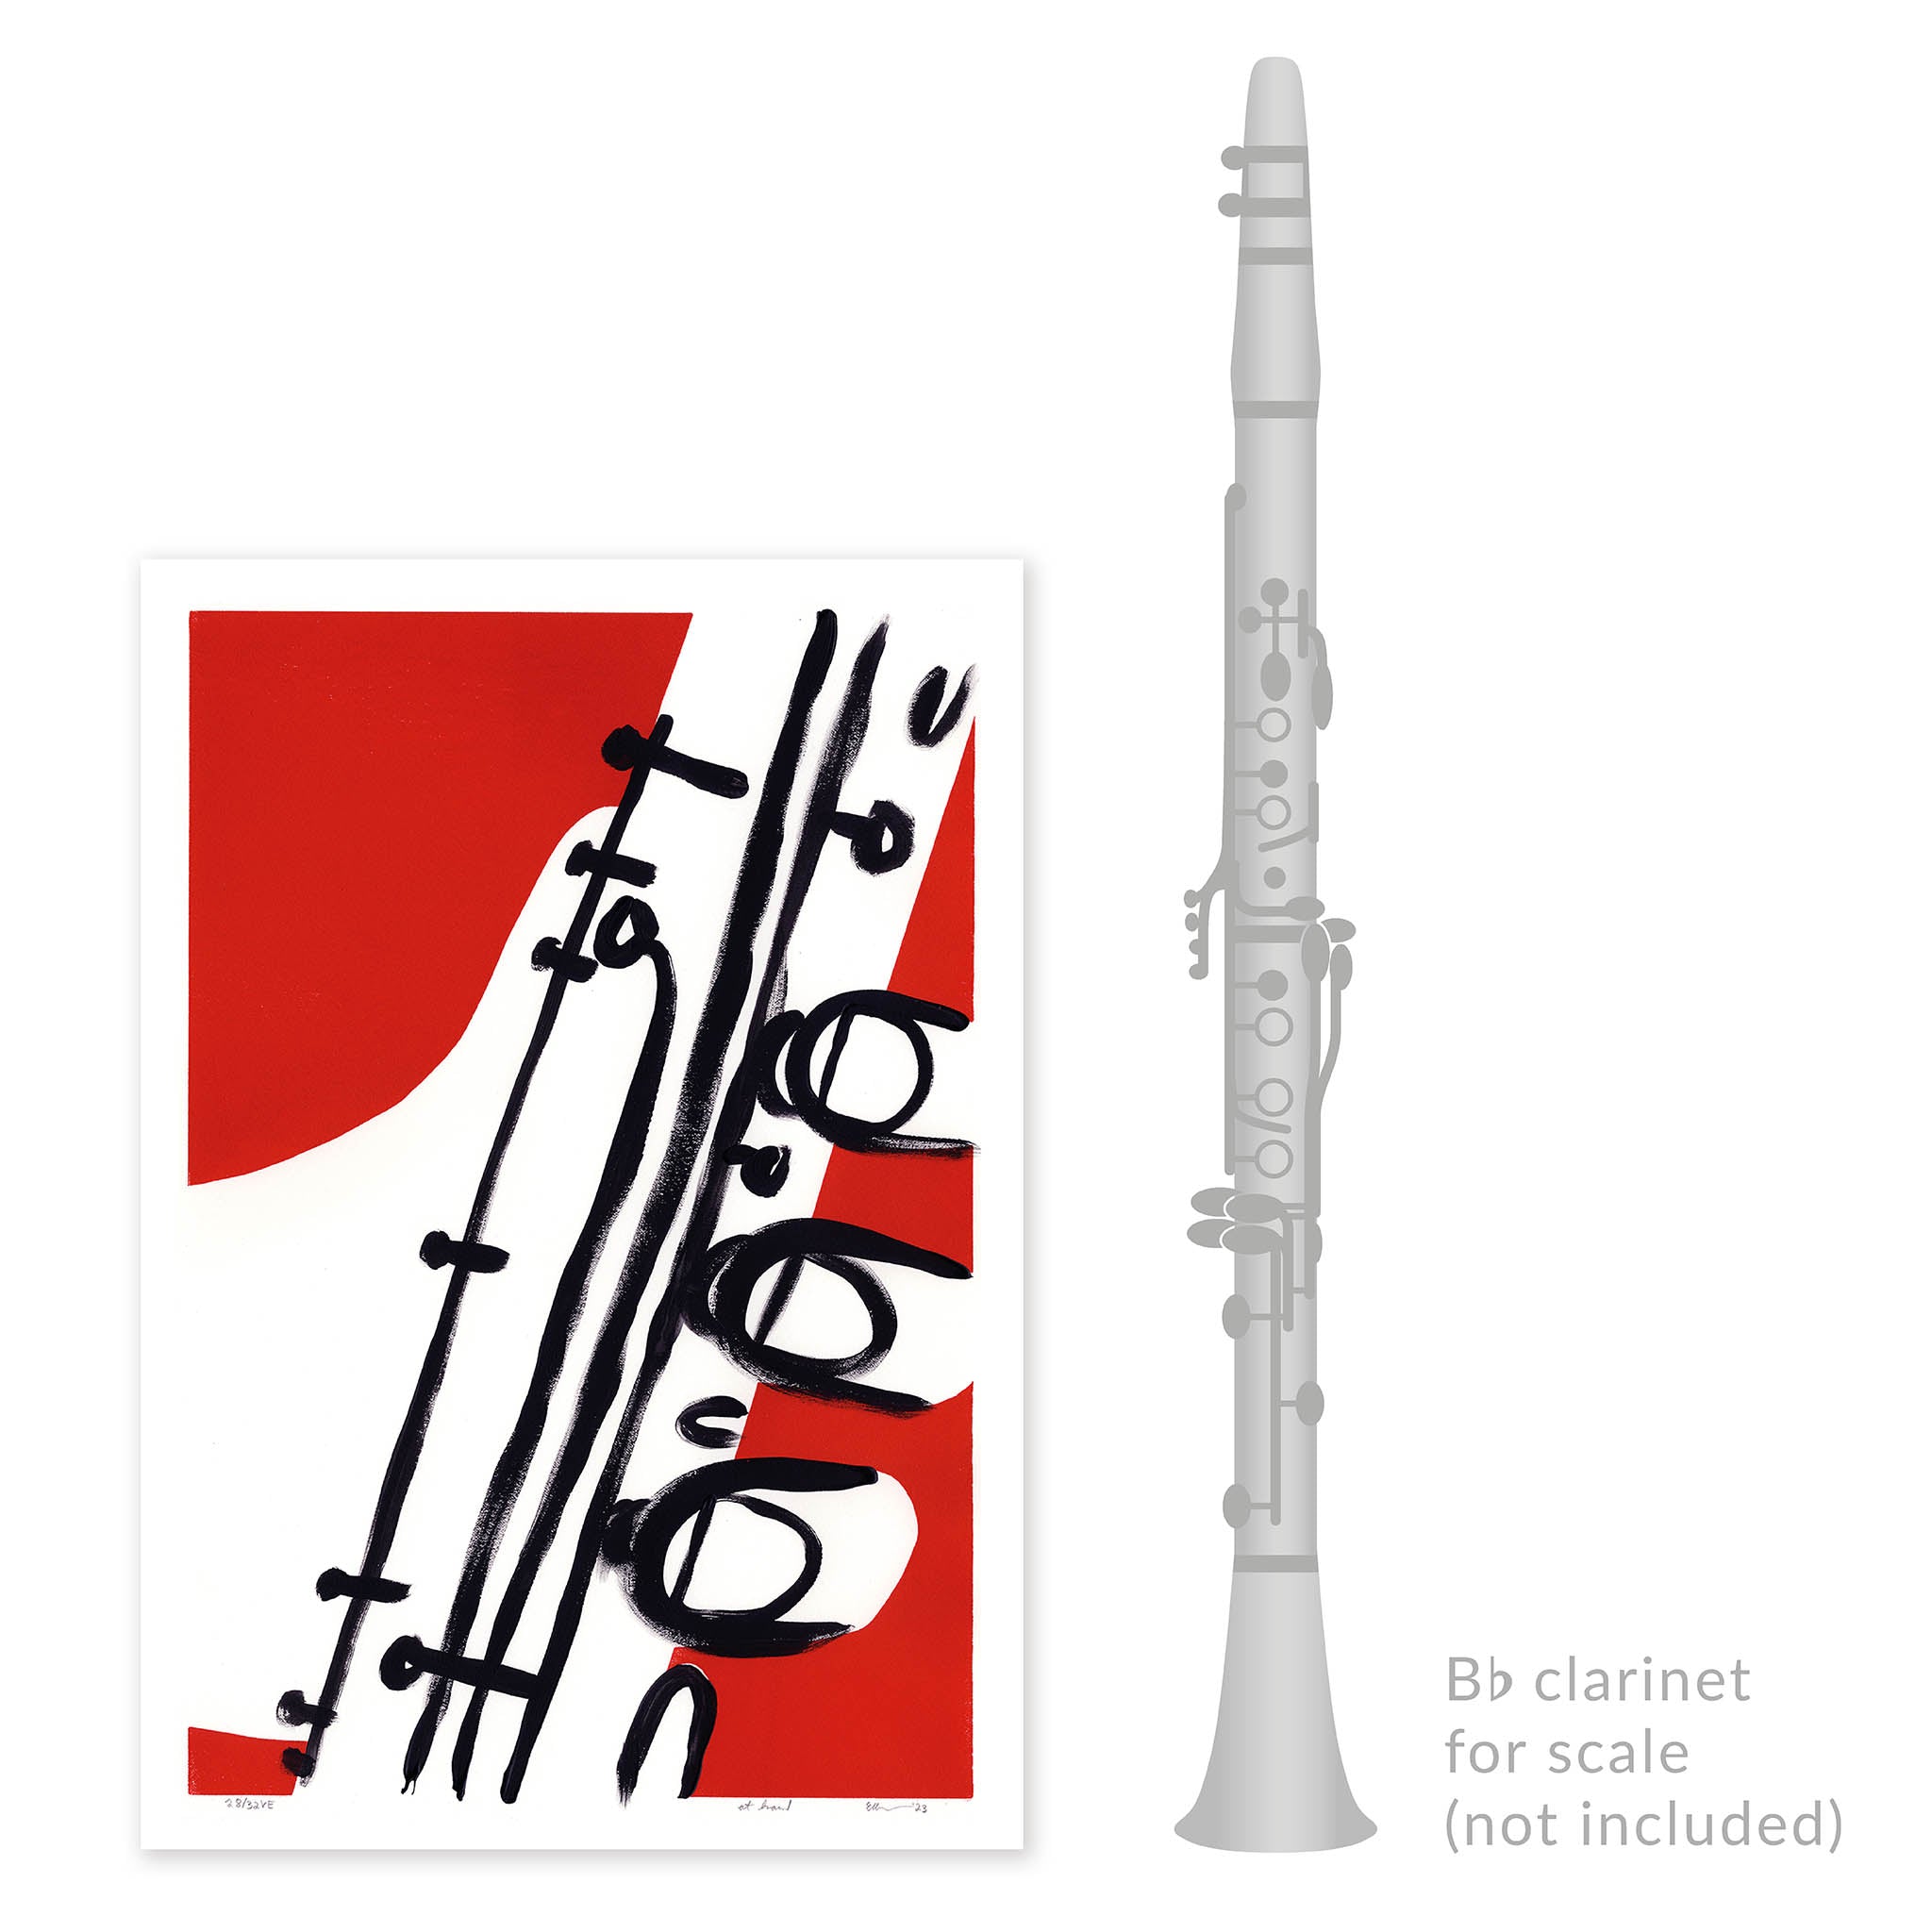 Elliot Keeler at hand clarinet linocut art print size comparison